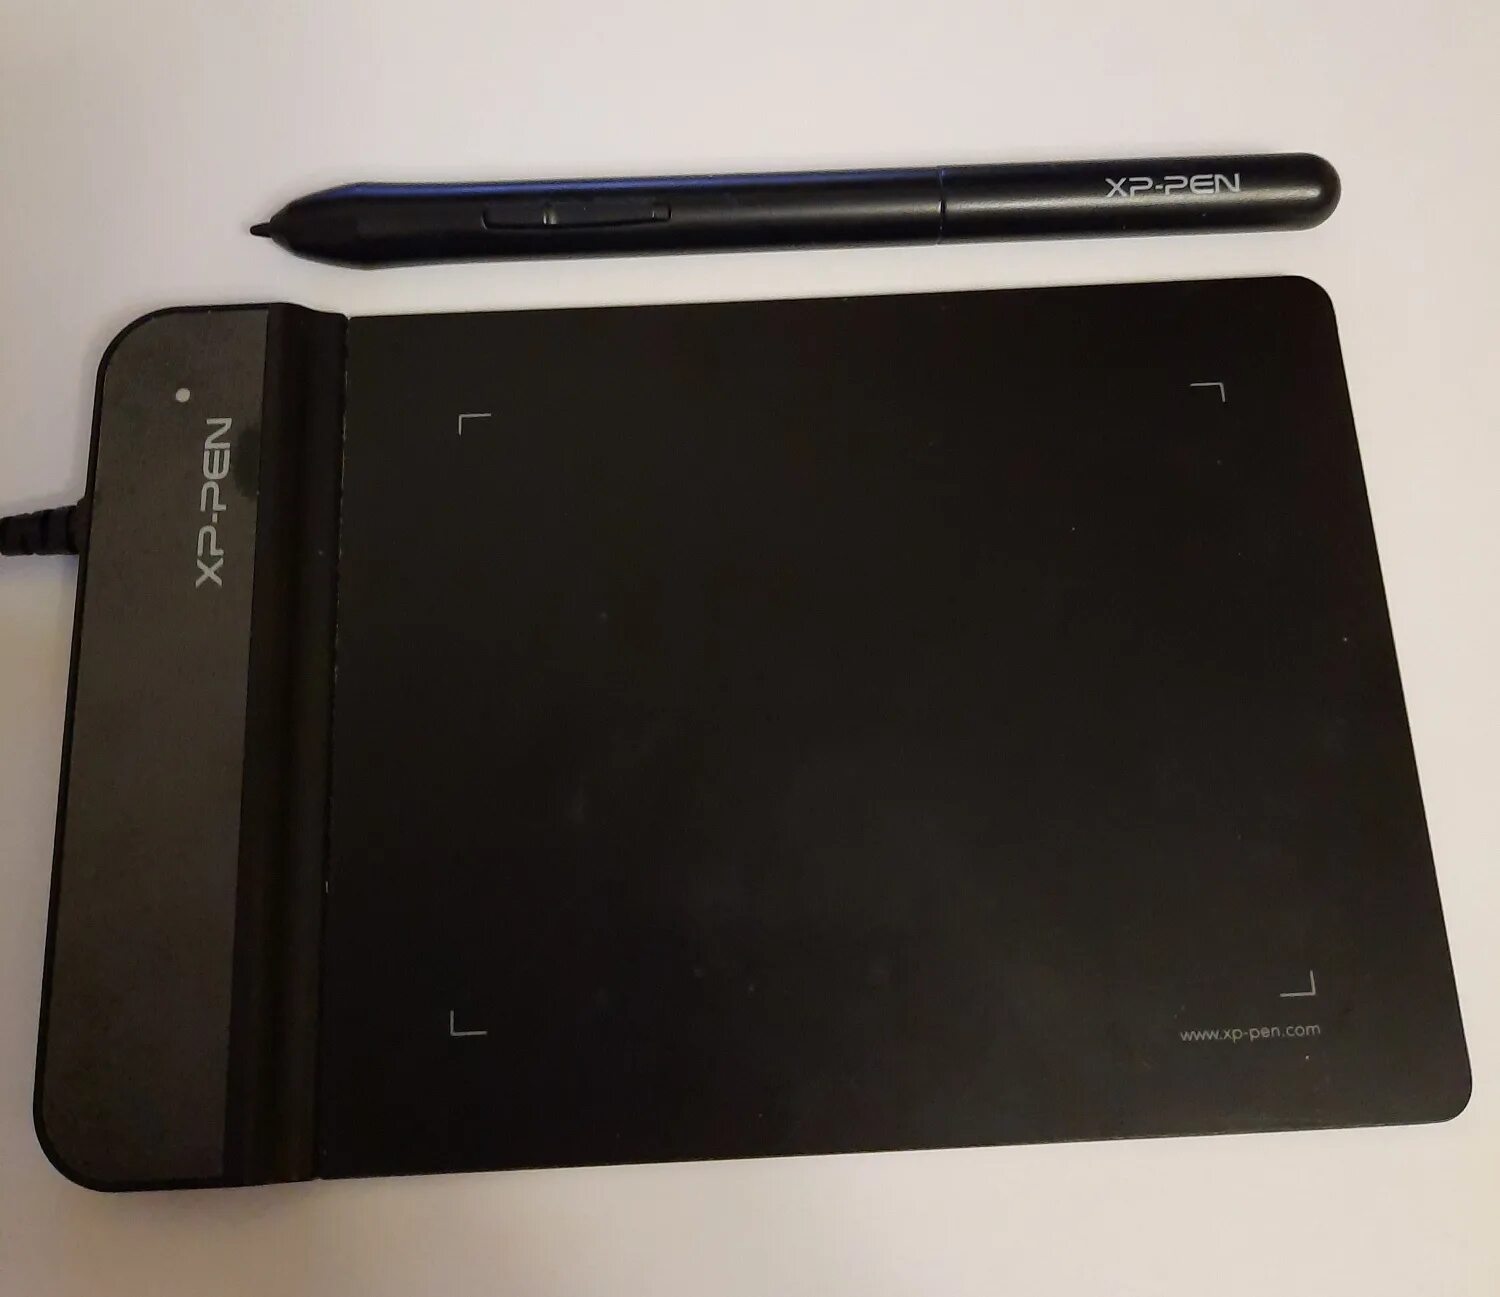 Планшет xp pen g960. XP-Pen Star g430s. Графический планшет XP Pen g430s. Графический планшет XP-Pen Star g430s. XP Pen g430 белый.